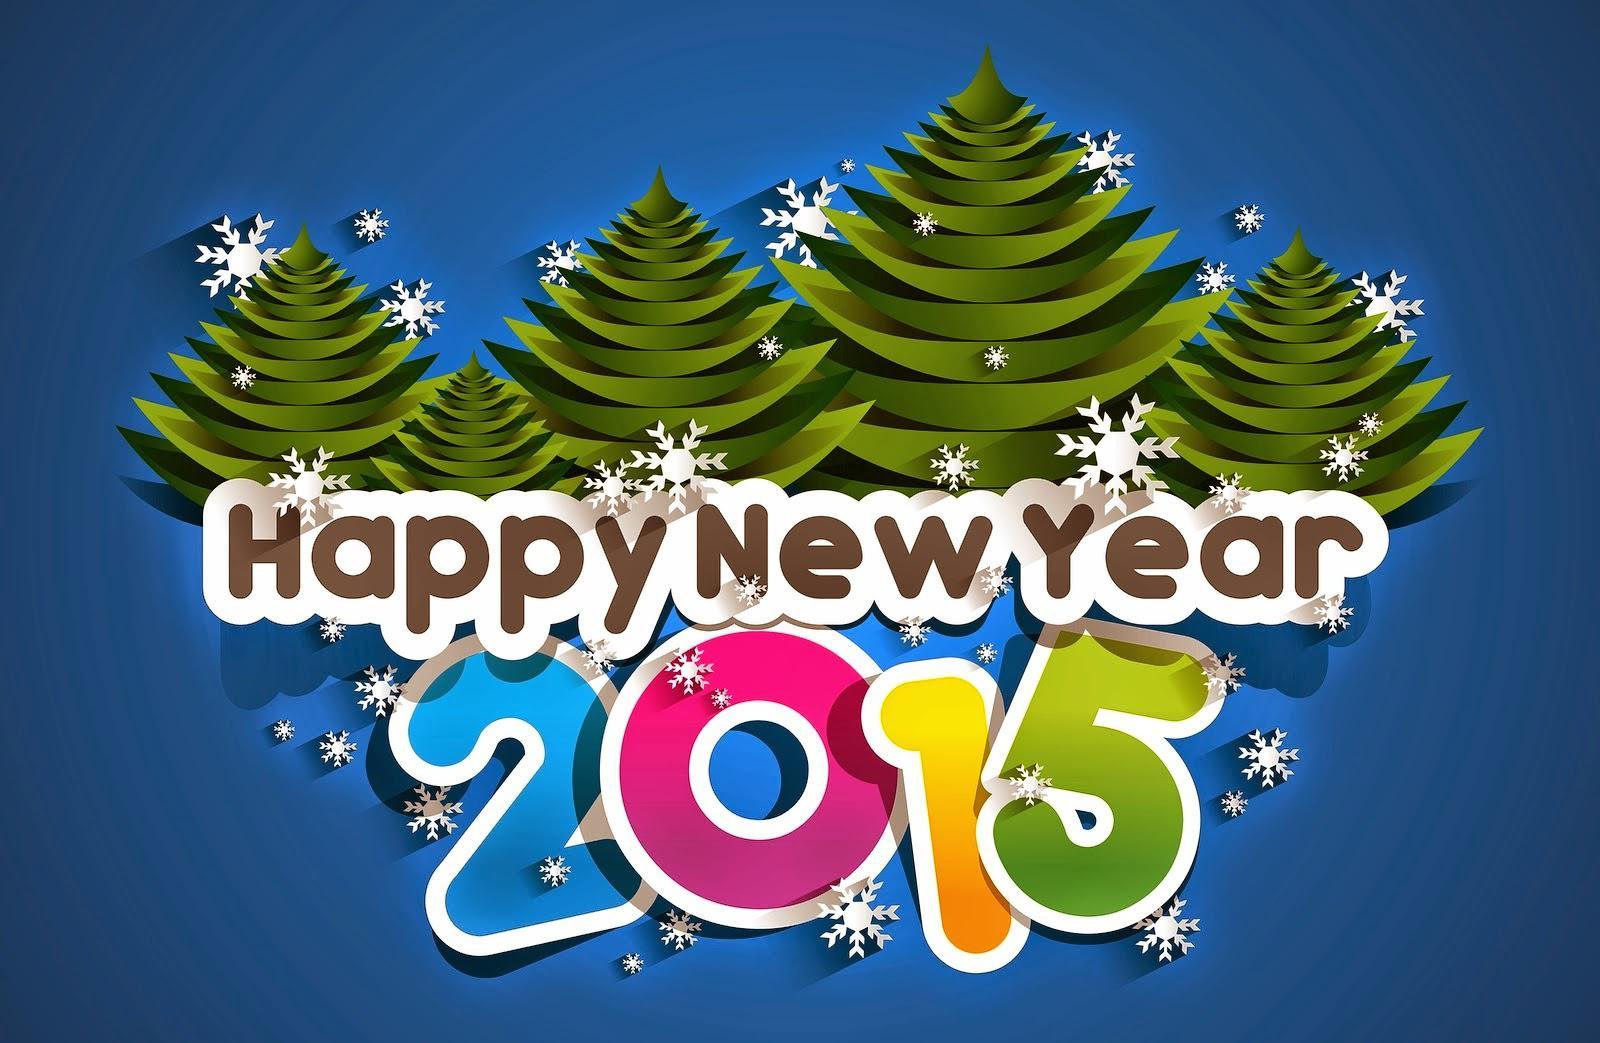 HD Wallpaper Happy New Year 2015 Image Pics Pc Wallpaper 2015